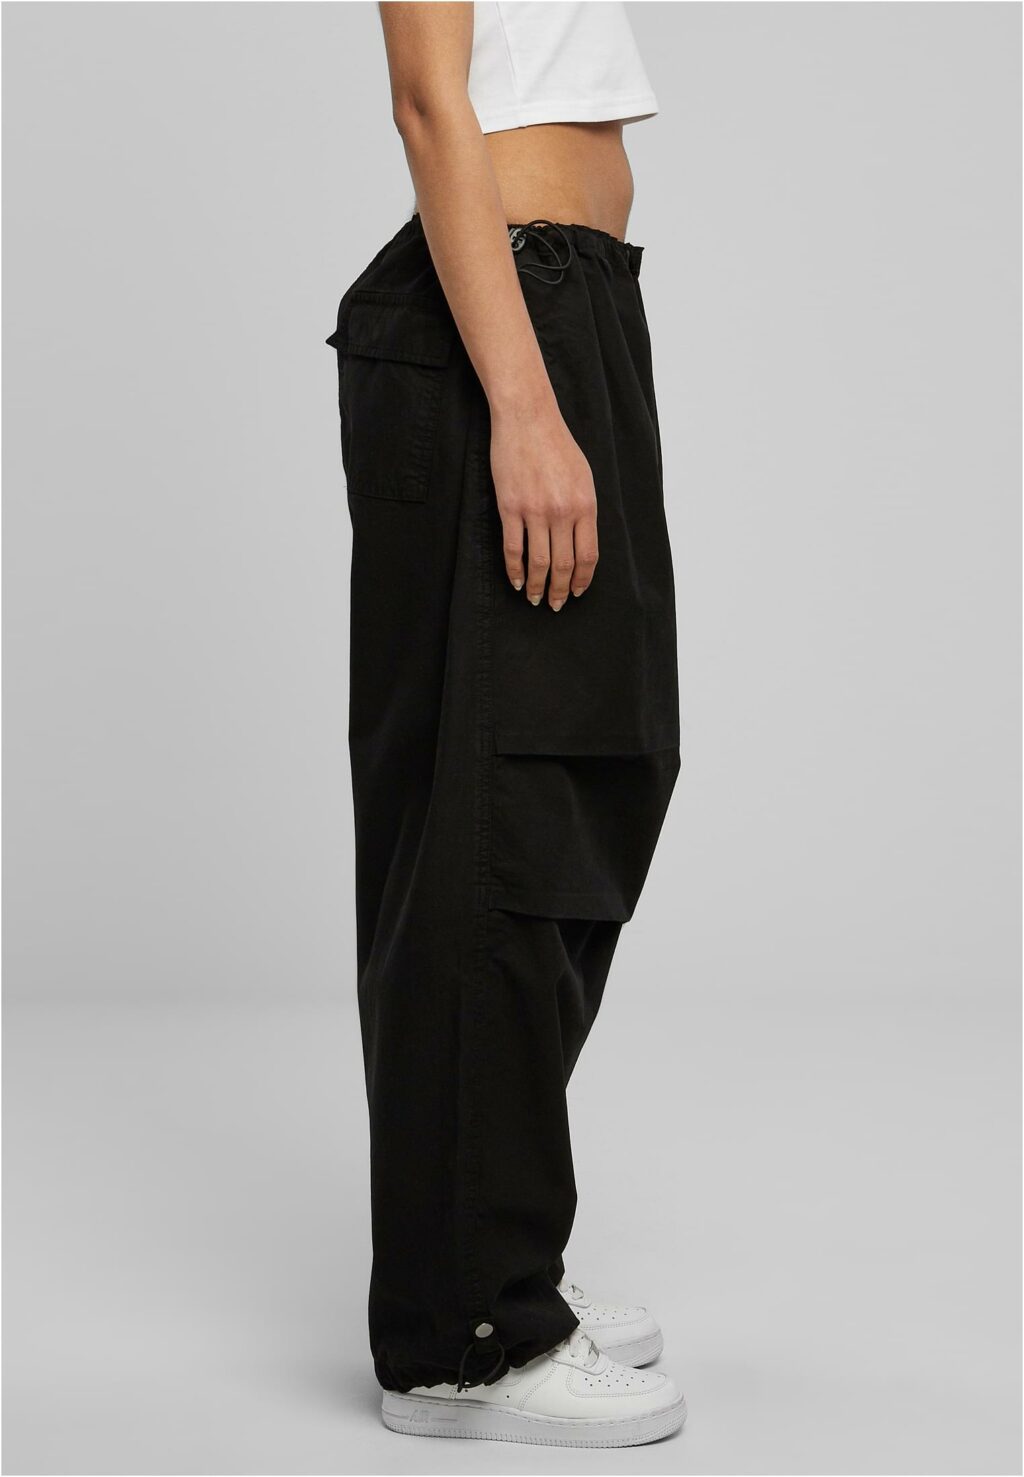 Urban Classics Ladies Cotton Parachute Pants black TB6101